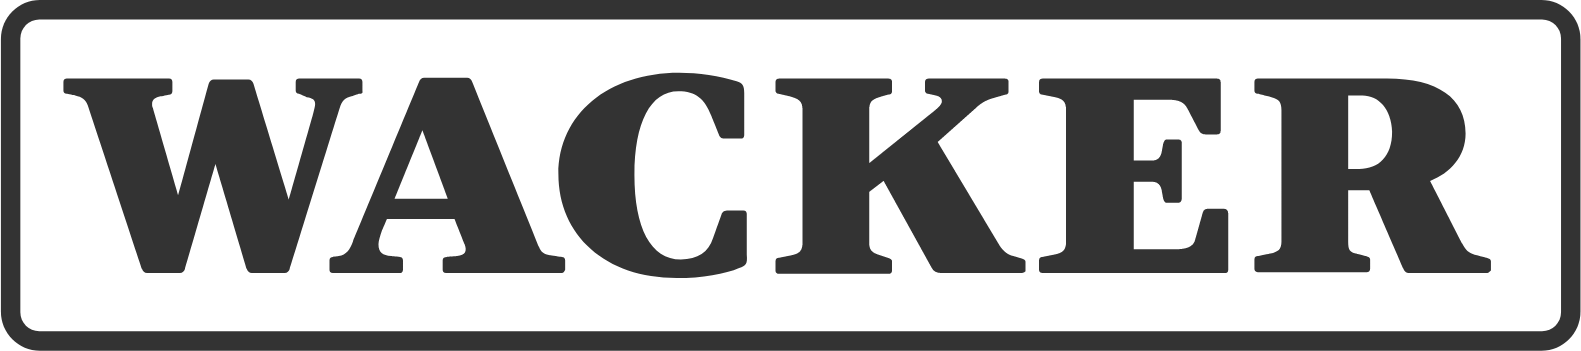 Wacker Chemie
 logo large (transparent PNG)